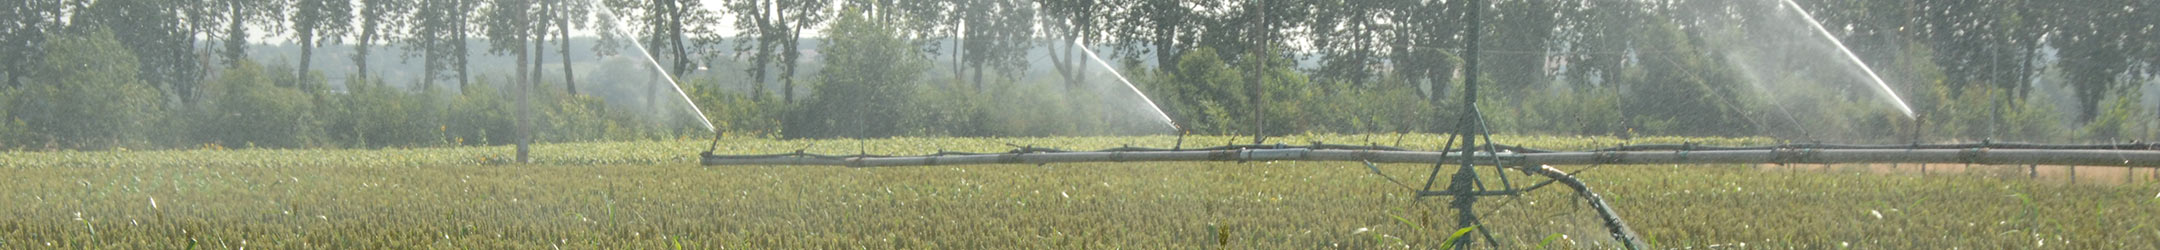 photo irrigation